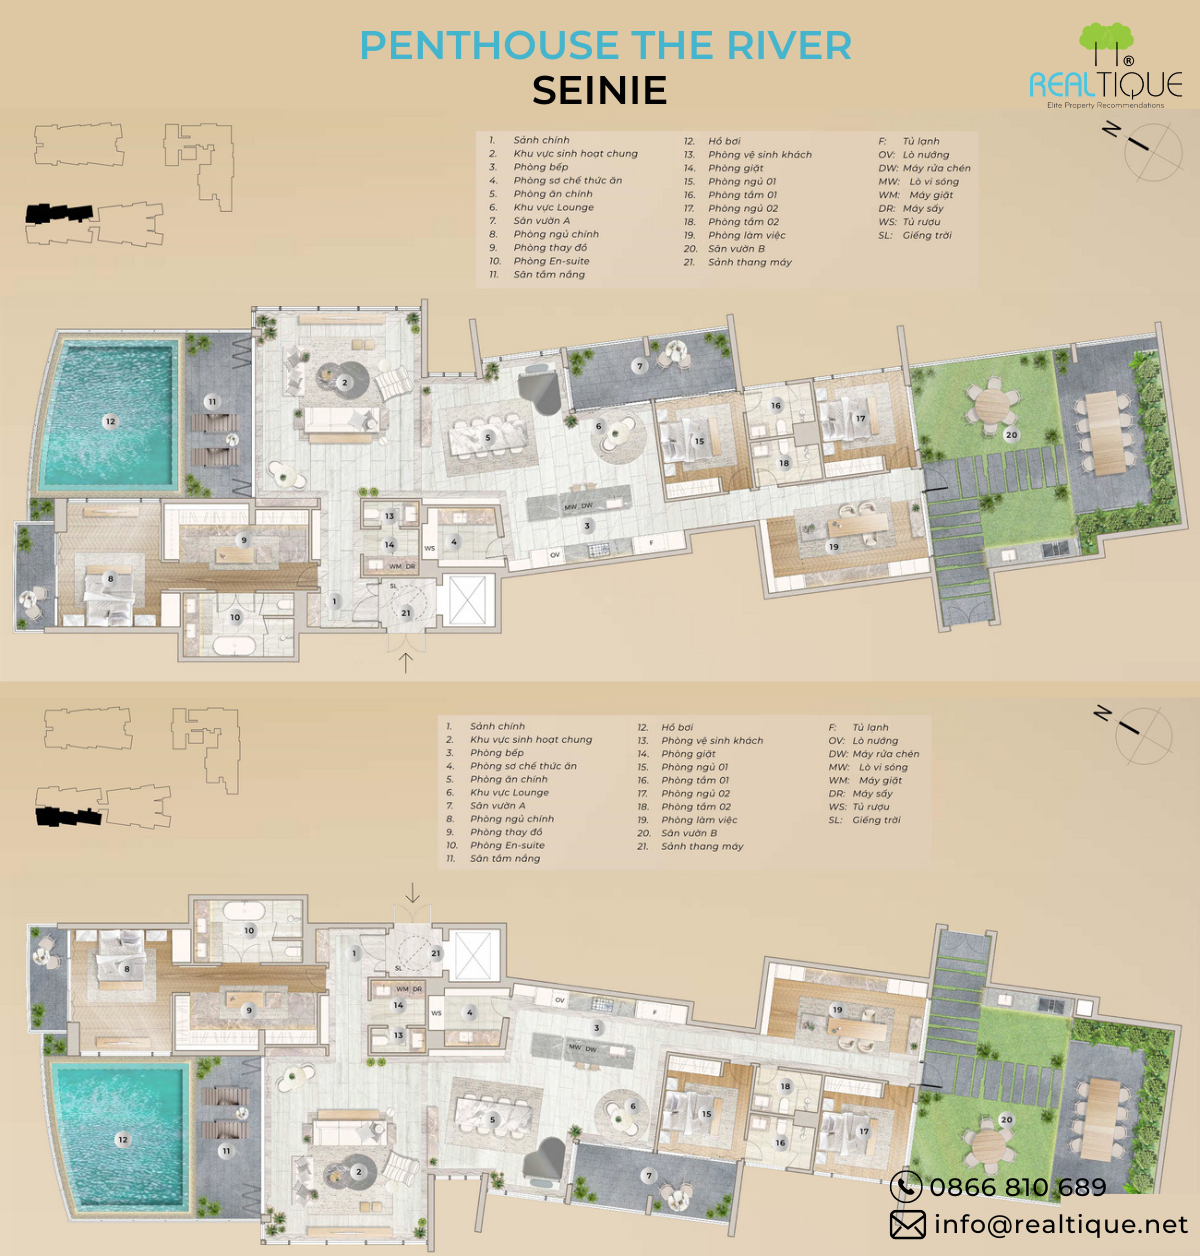 Penthouse The River Seine Floor Plan